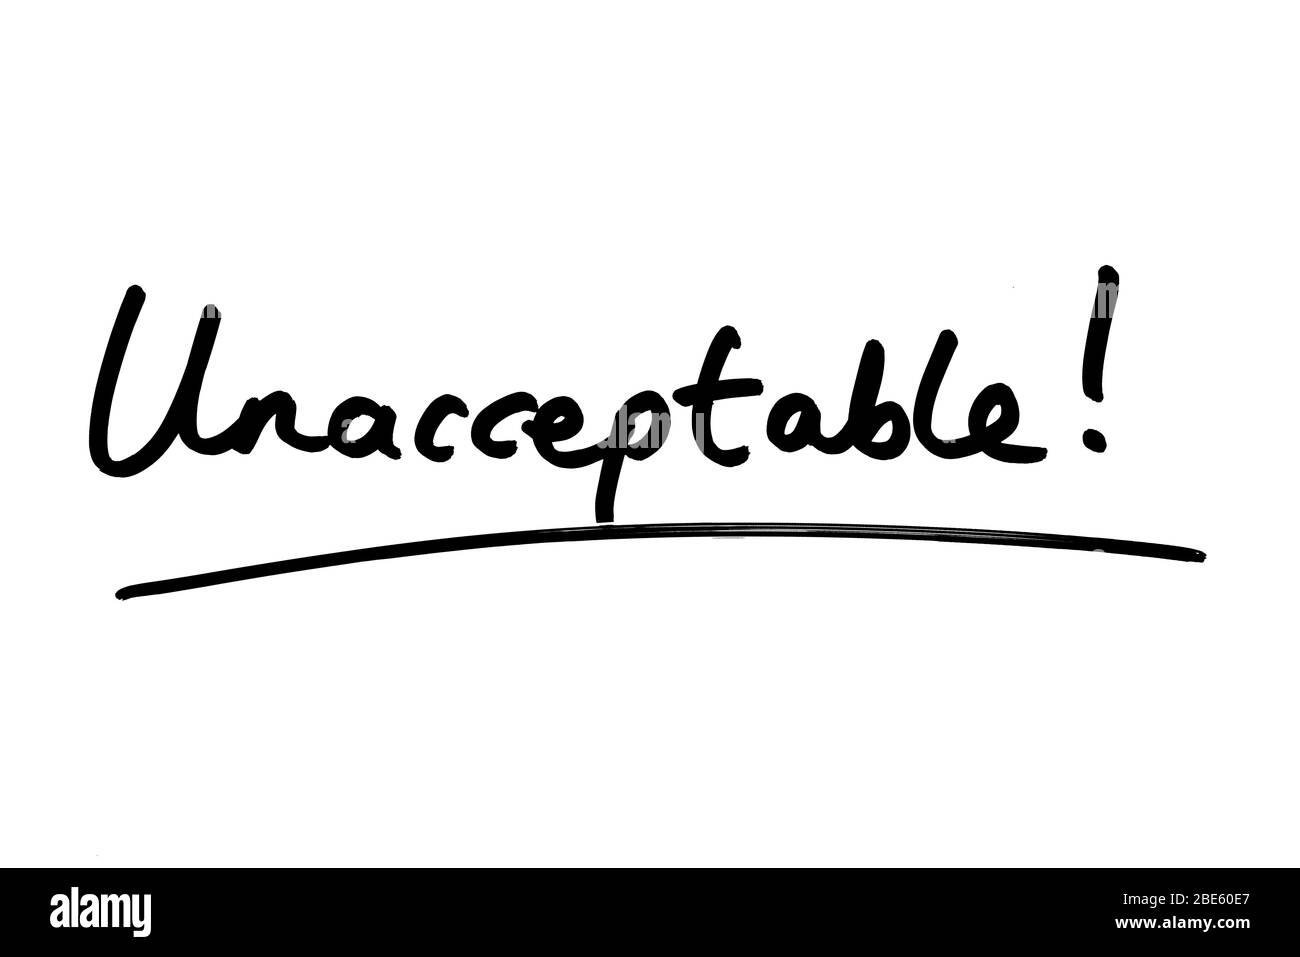 Unacceptable! handwritten on a white background. Stock Photo